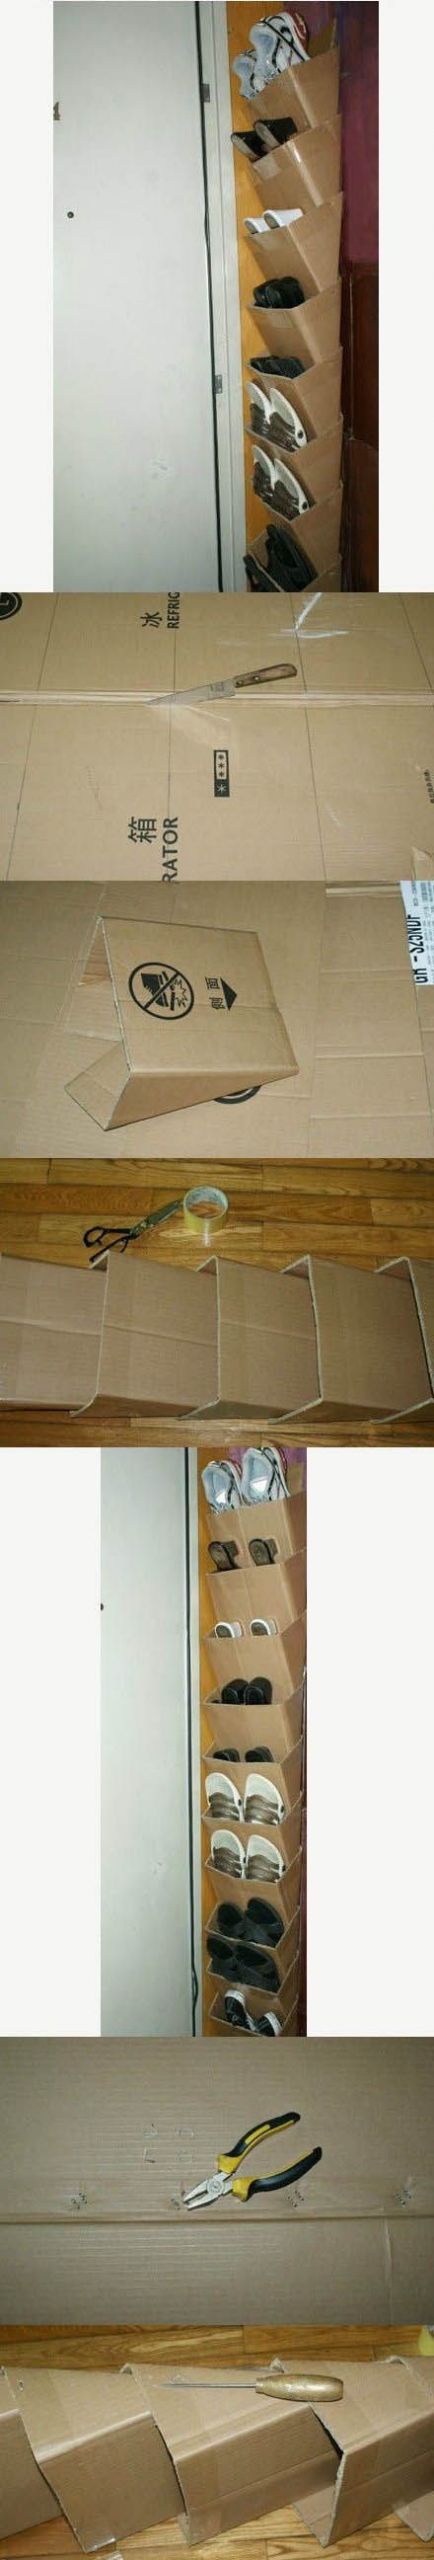 DIY Shoe Rack Cardboard
 How to make a shoe organizer using used cardboard boxes